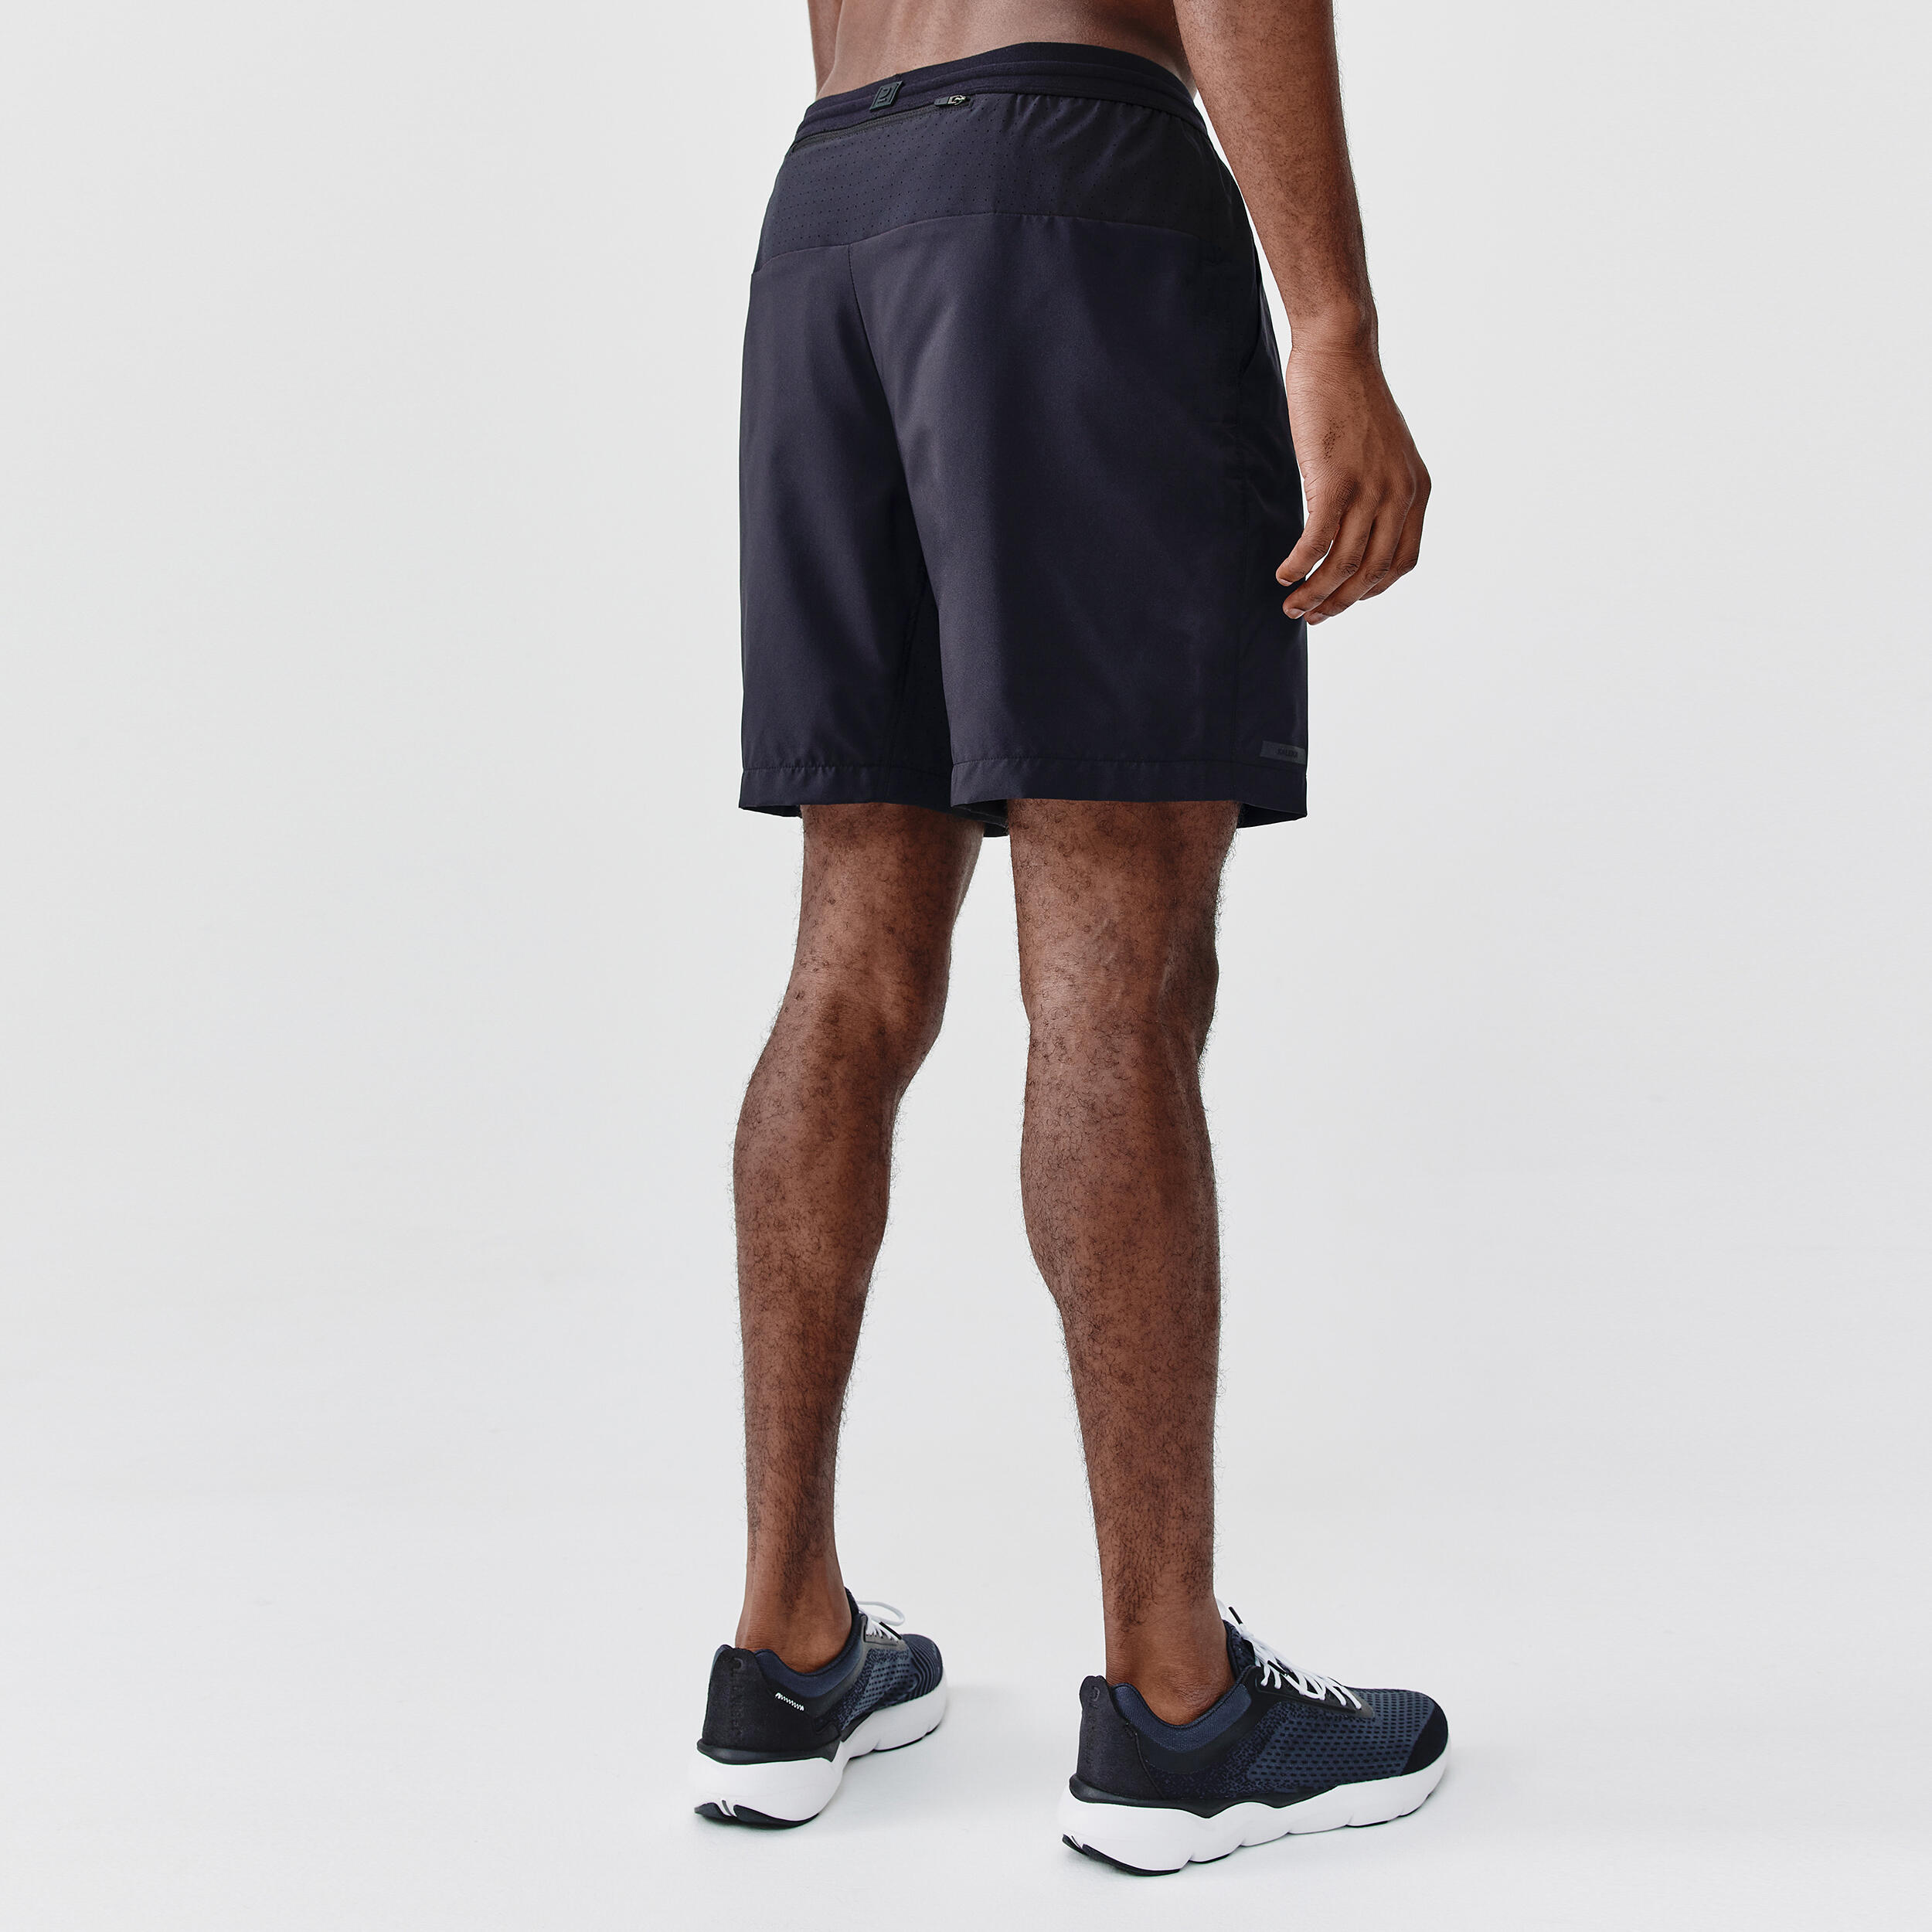 FitsT4 Men's 7 Inch Athletic Workout Running Shorts w Zip Pockets